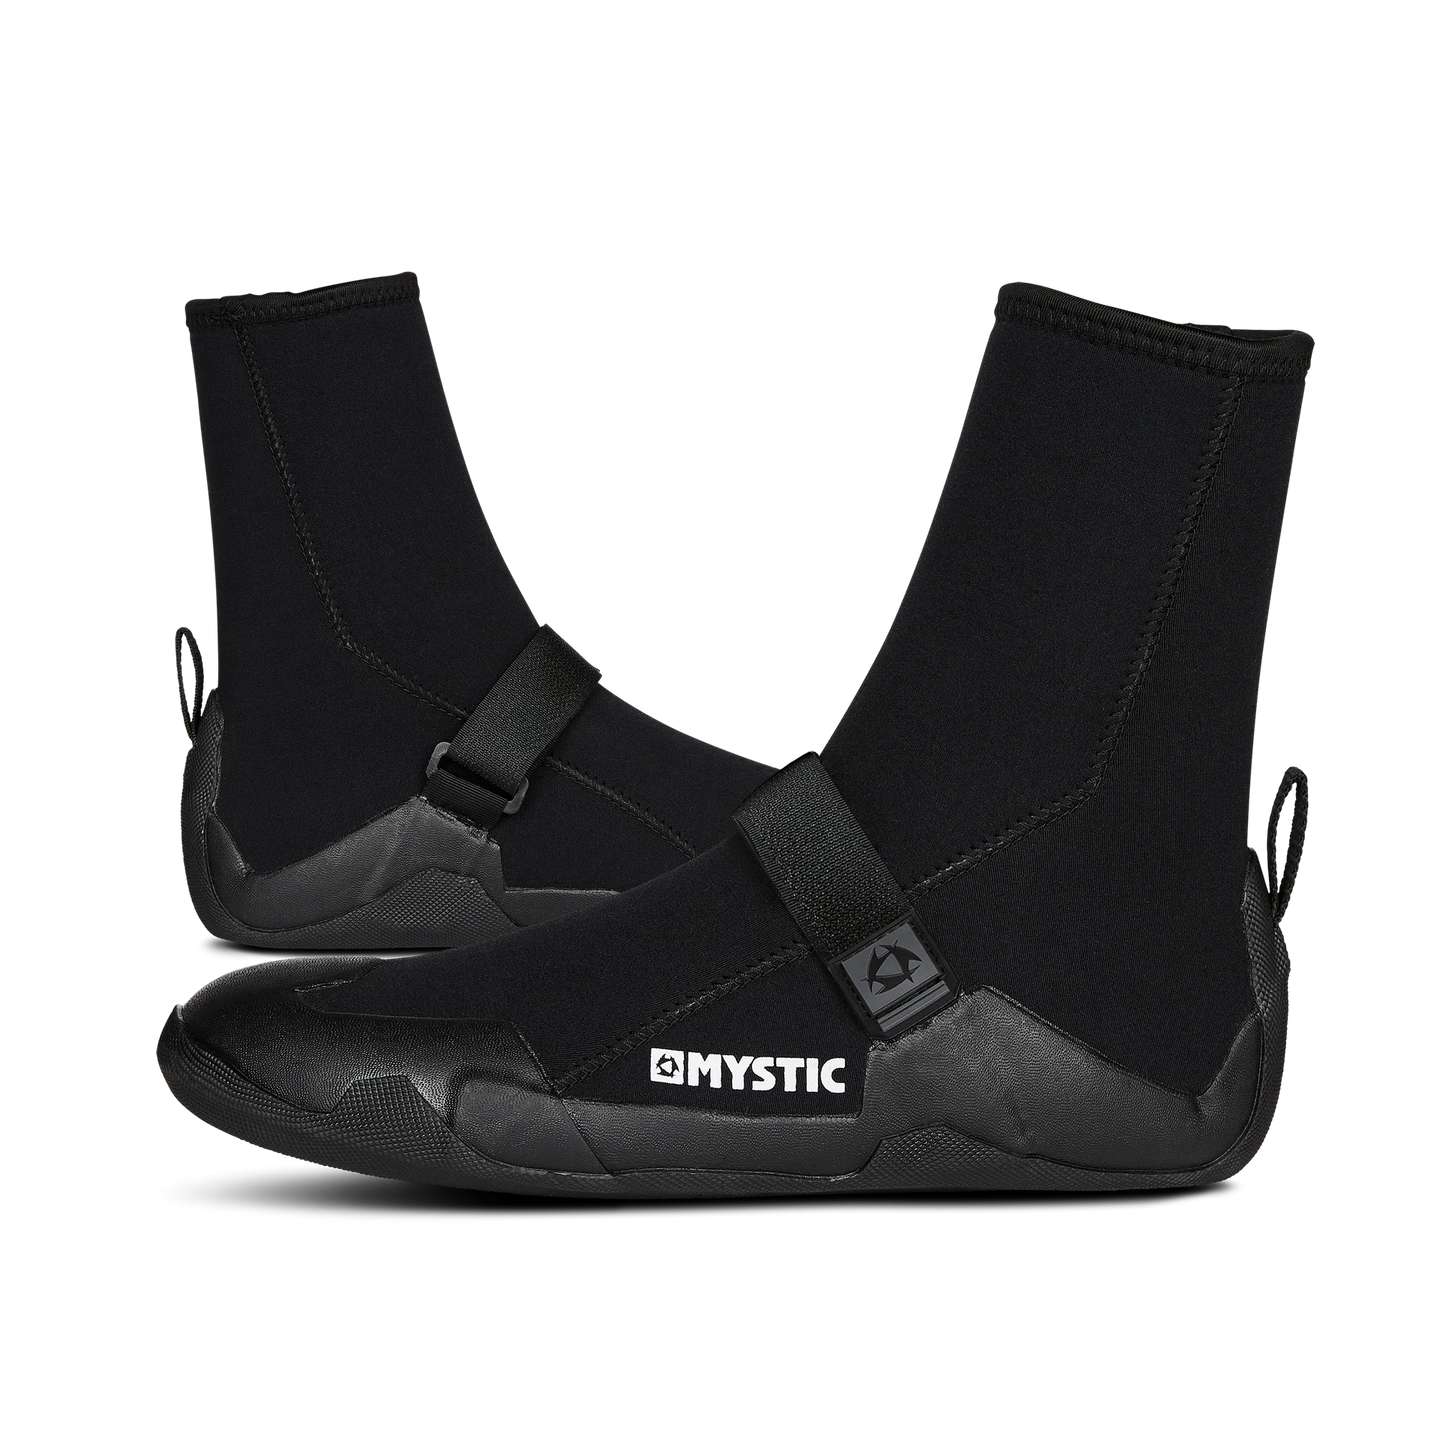 Mystic Star 5mm High Cut Neoprene Boot Sizes 9.5, 10-11, & 12 30% off